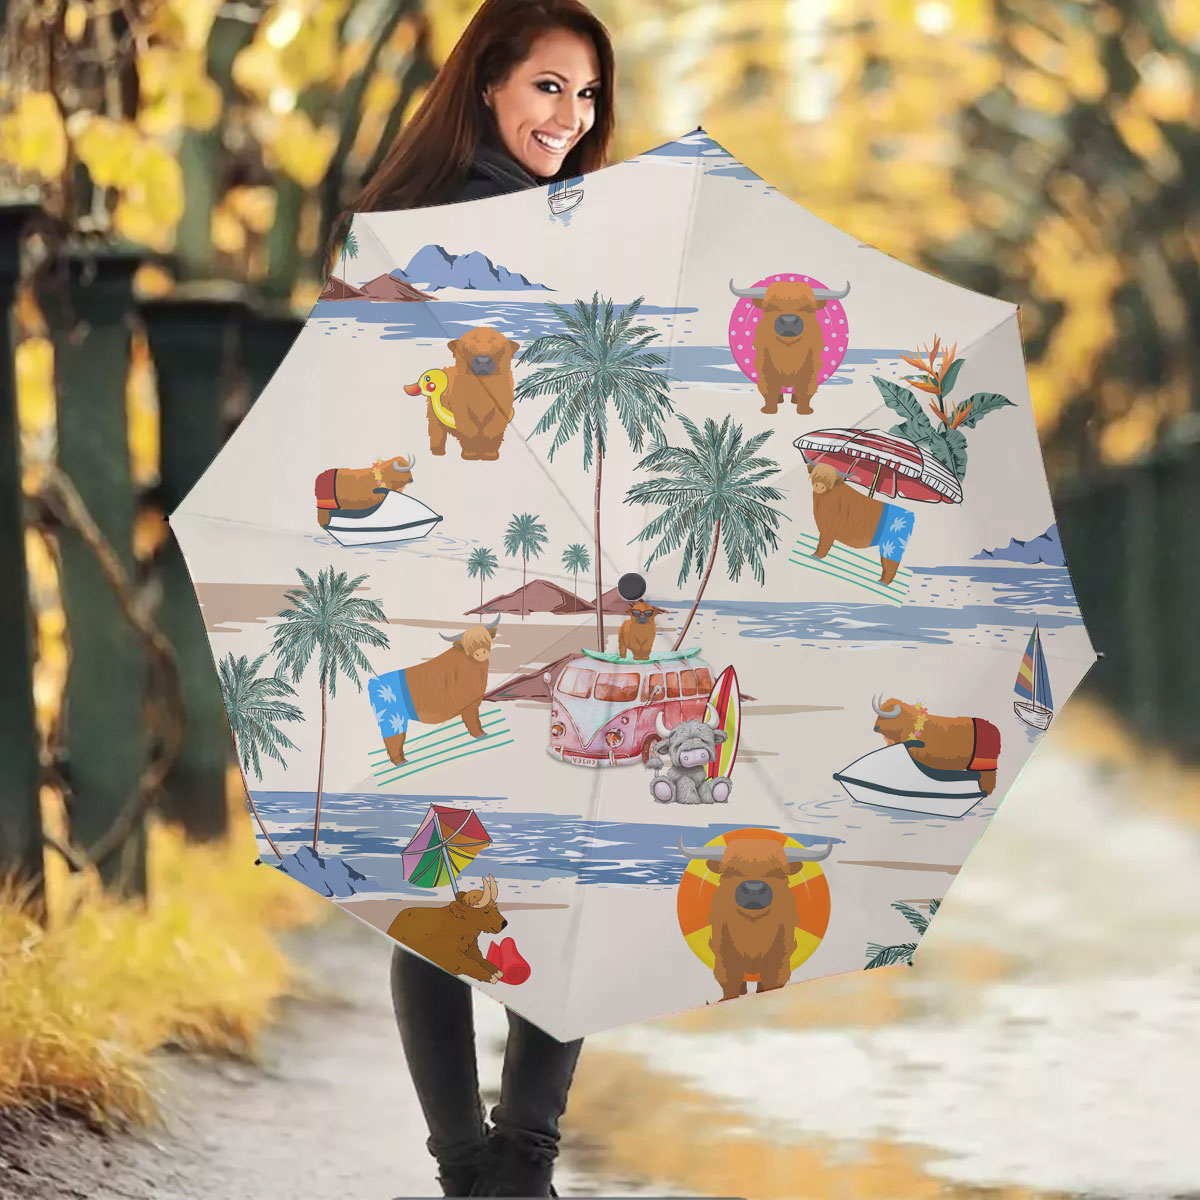 Highland Summer Beach Pattern Umbrella